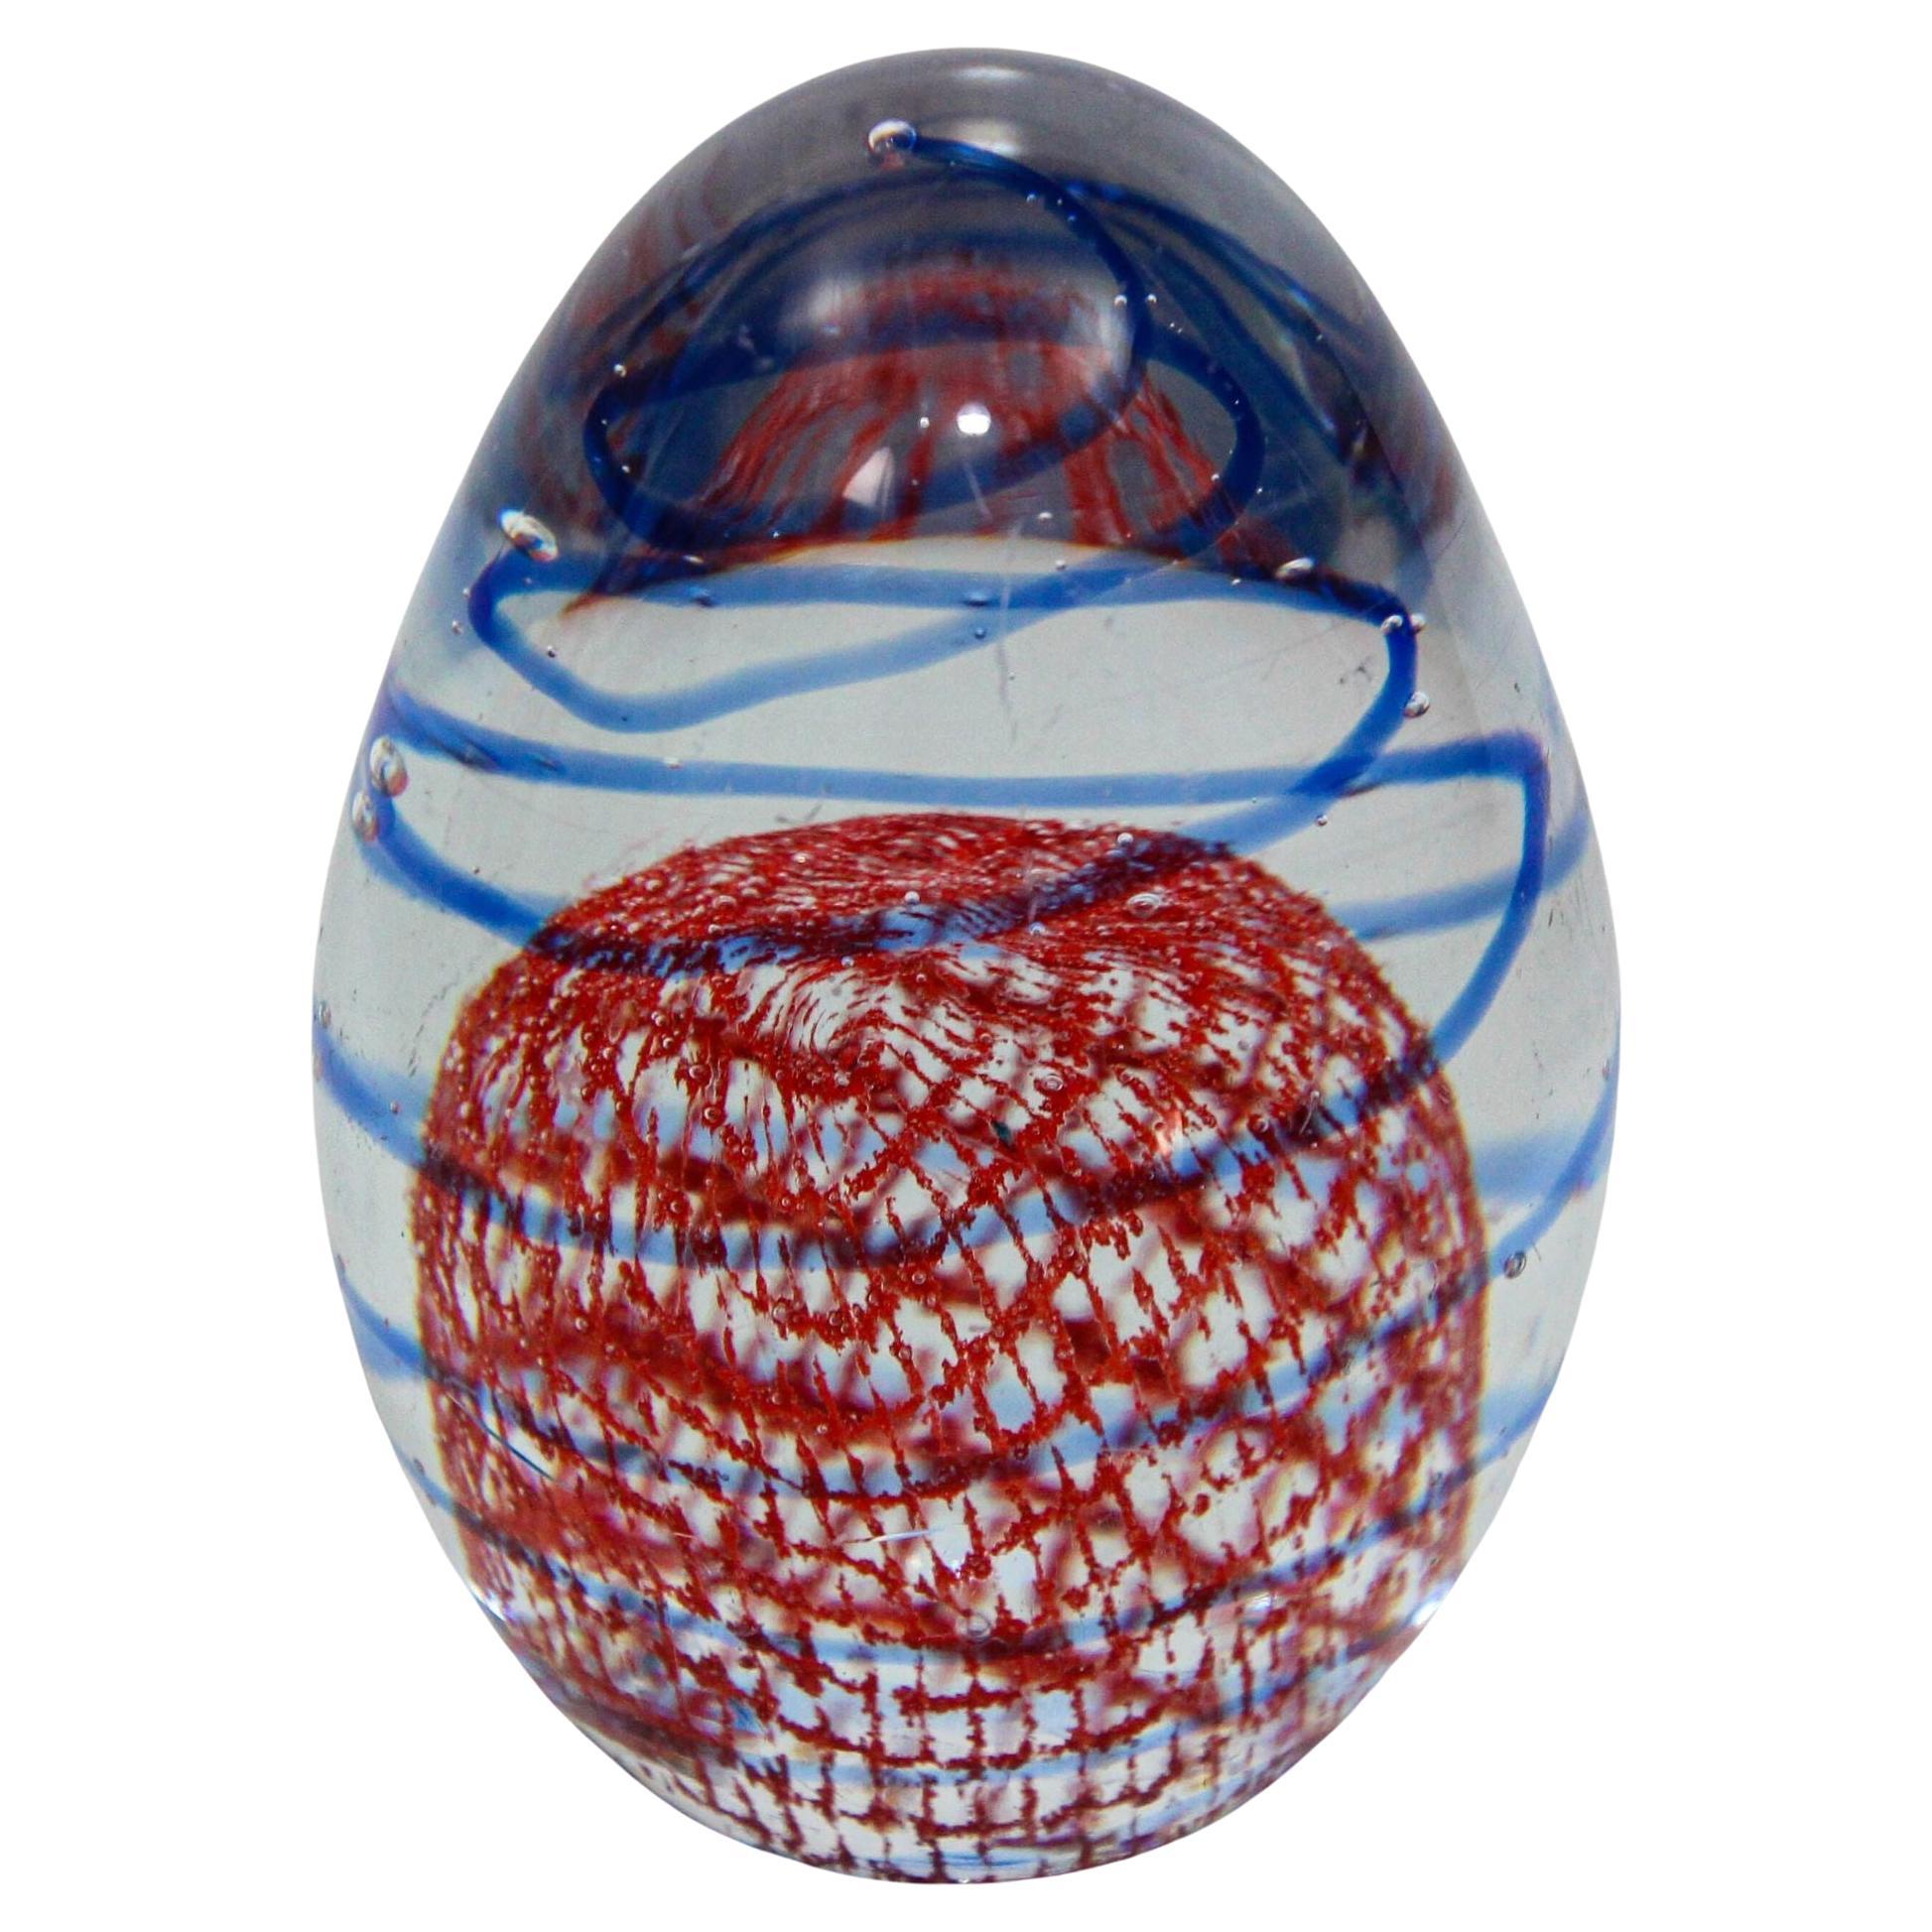 Murano Paperweight Blue Red Ribbons Italian Art Glass Egg Shape Circa 1960s